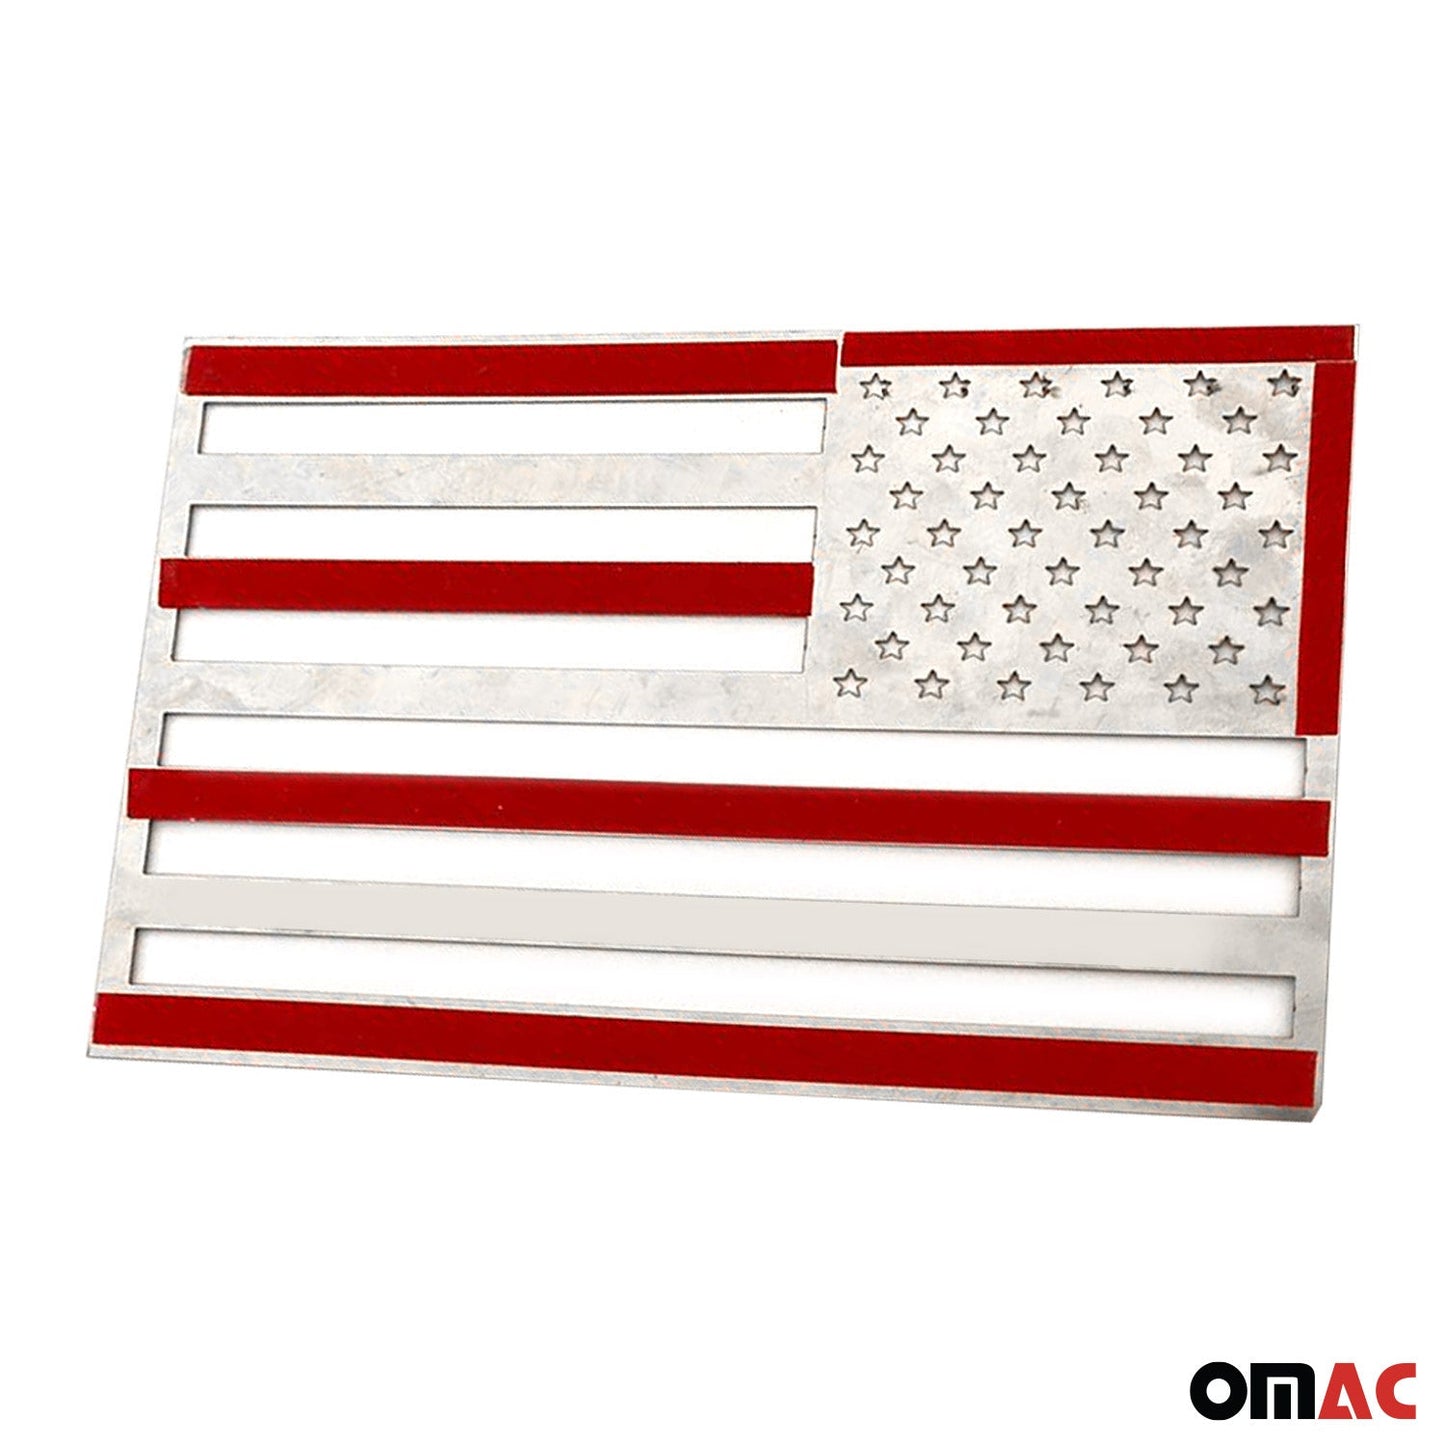 OMAC US American Flag Brushed Chrome Decal Car Sticker Emblem Steel LC-96USA001T